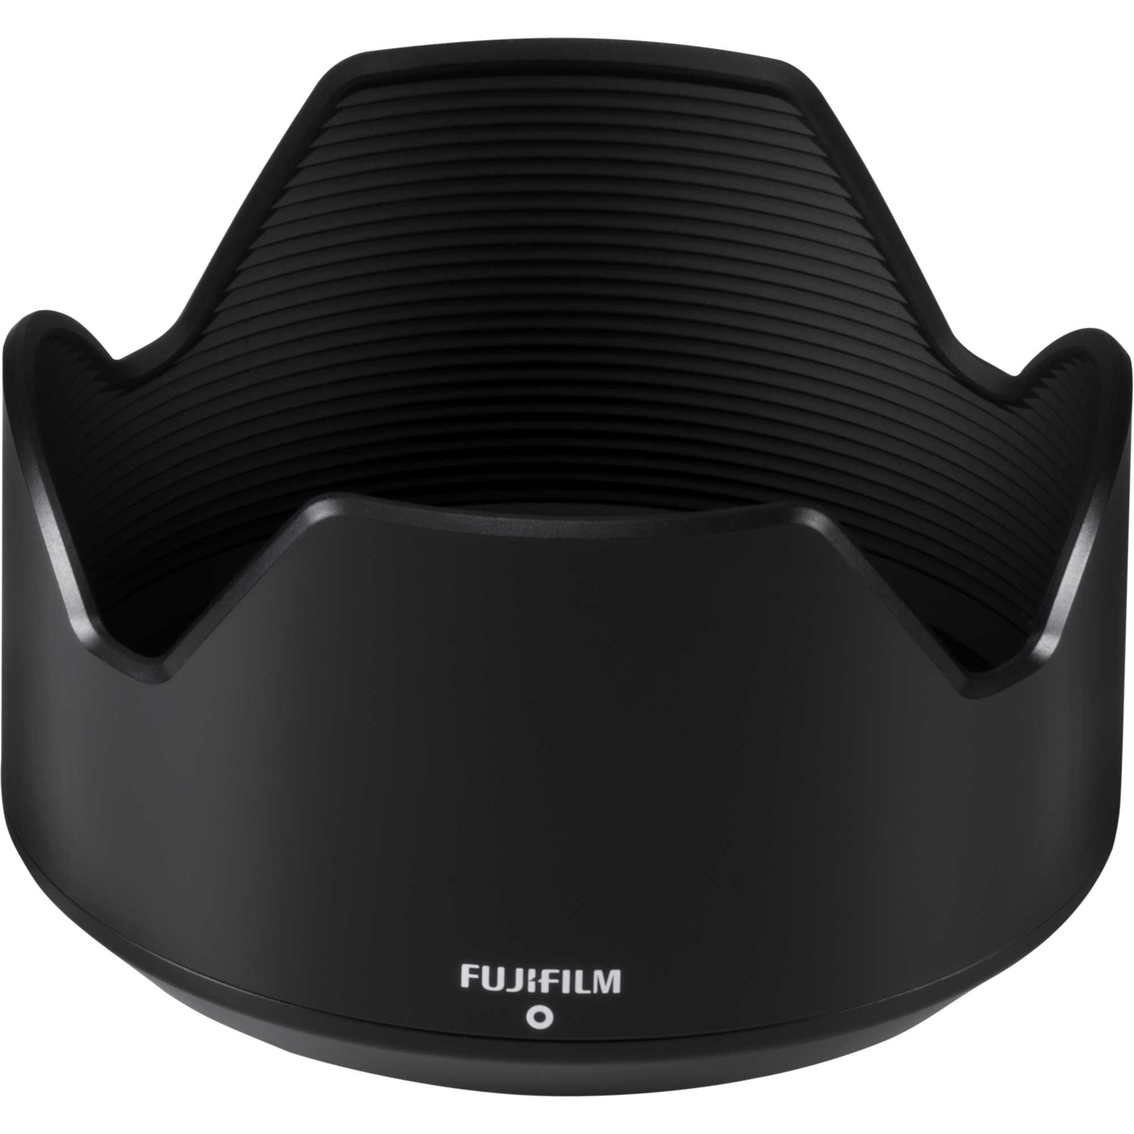 Fujifilm Fujinon GF 45mm F2.8 R Weather Resistant Lens - Image 4 of 4